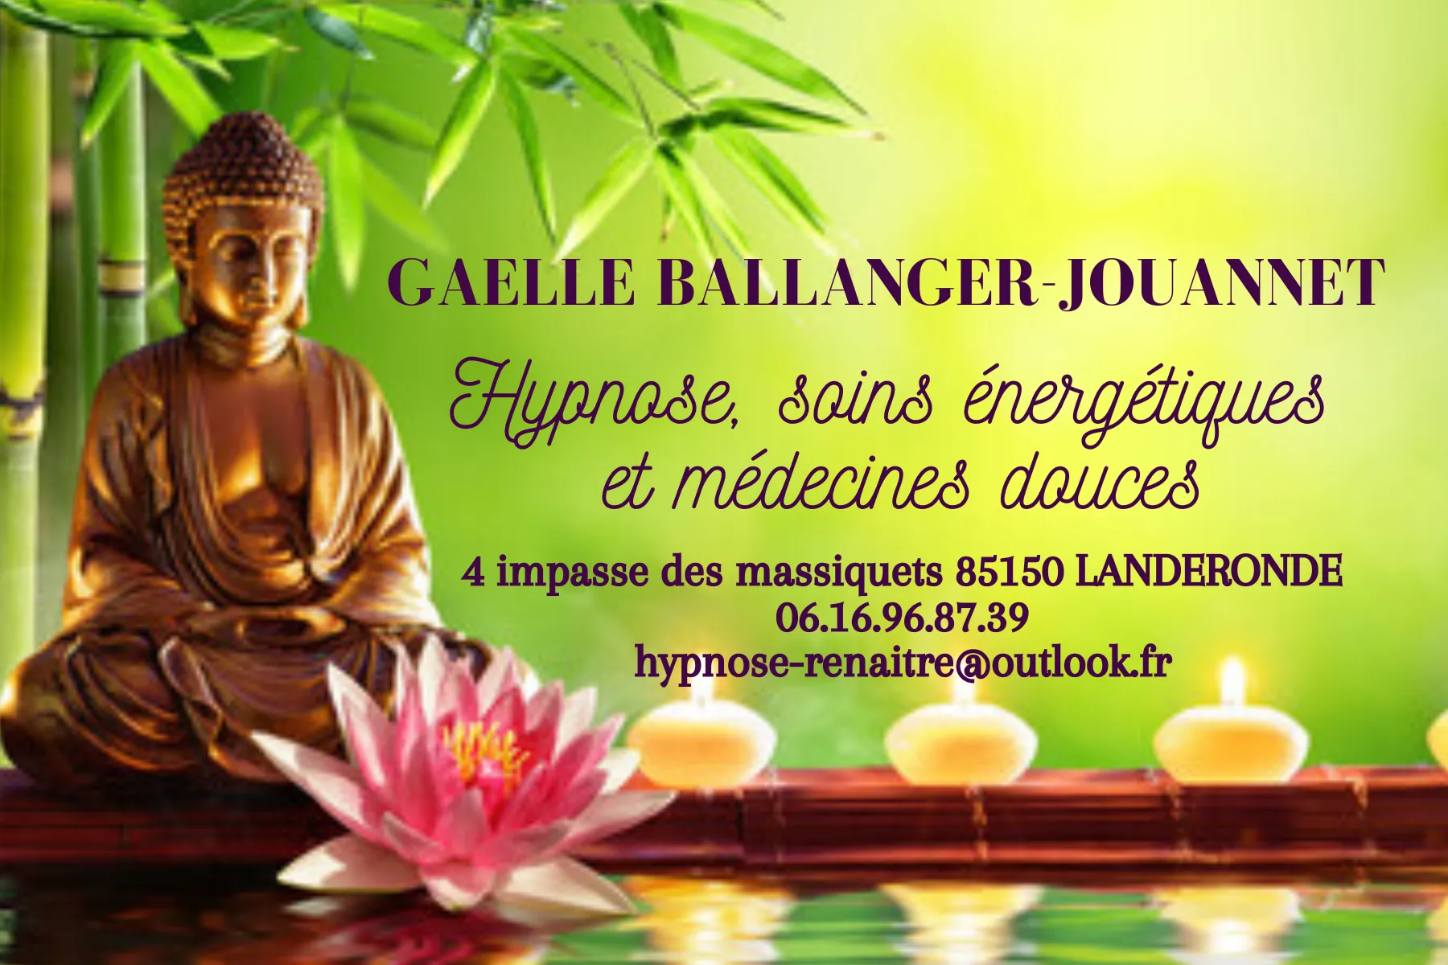 BALLANGER JOUANET Gaelle - Landeronde